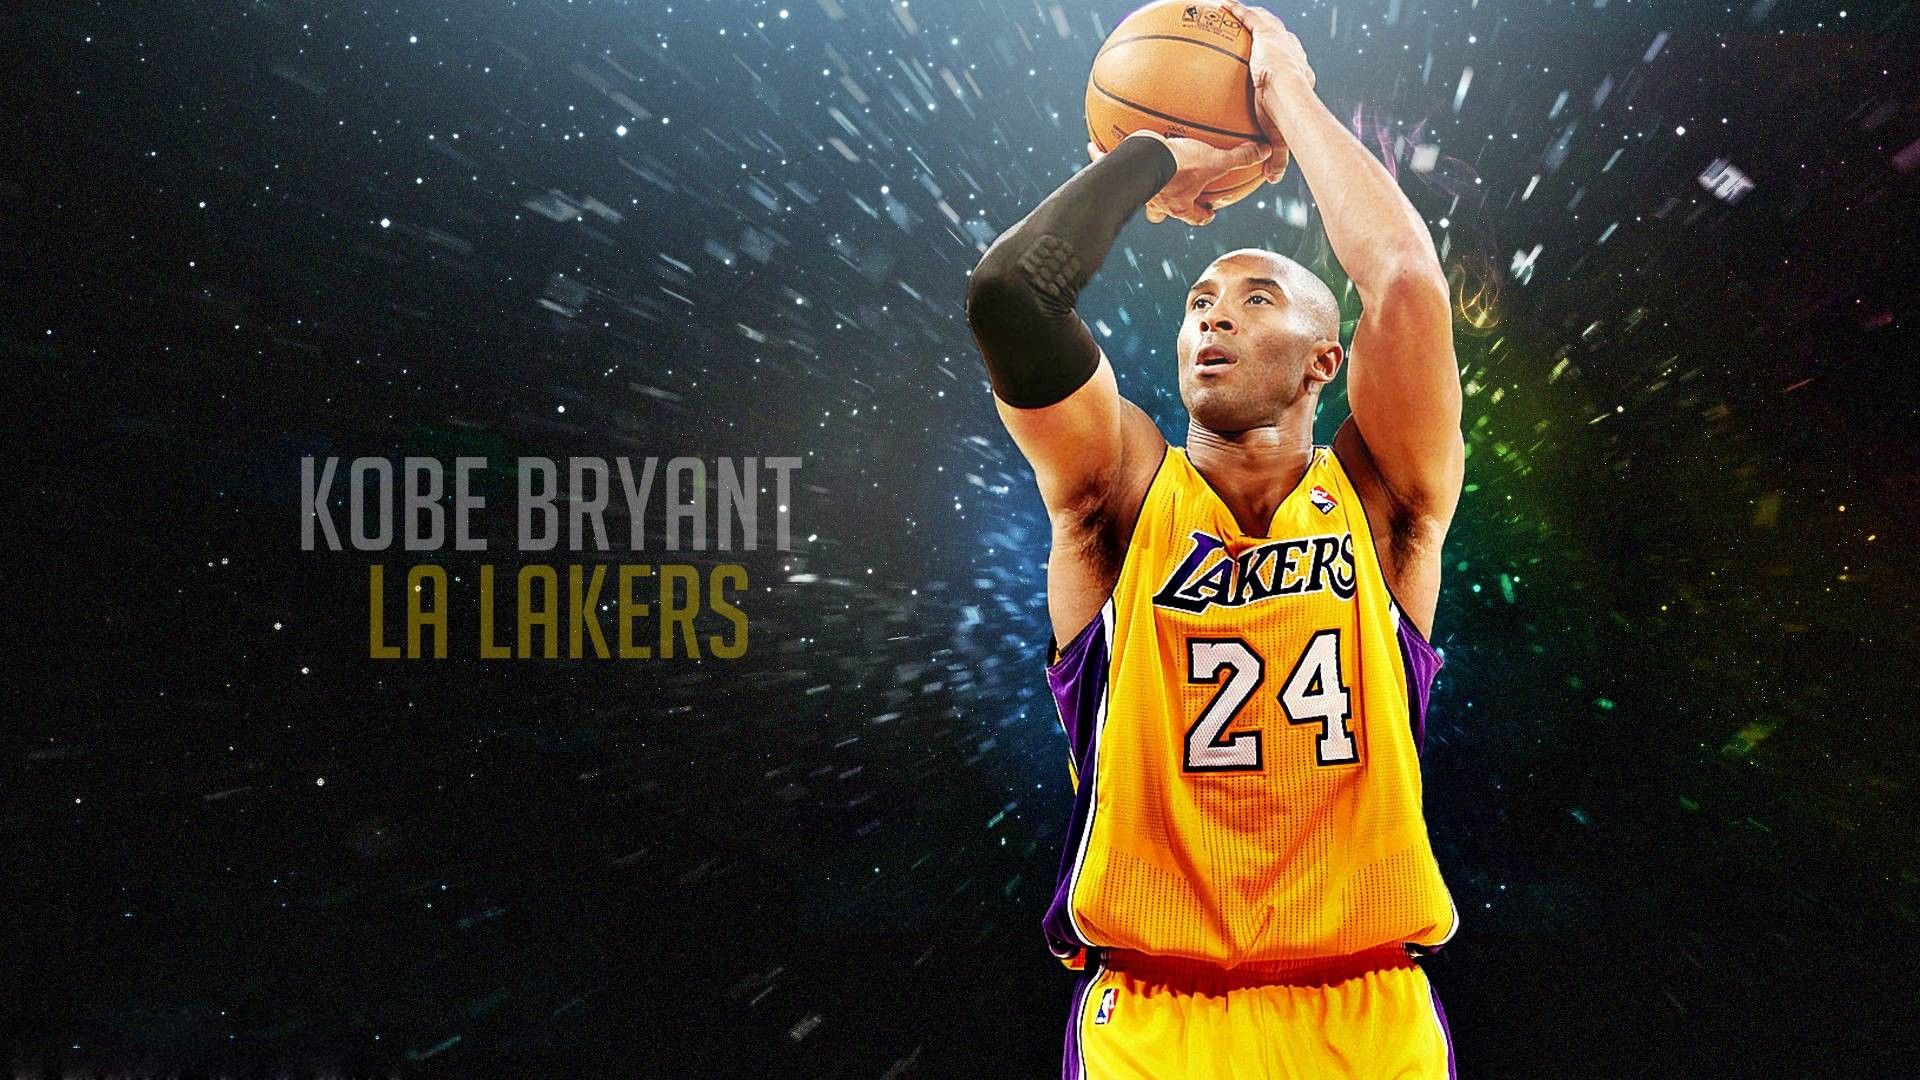 Kobe Bryant Wallpaper. #Lakeshow  Kobe bryant quotes, Kobe bryant